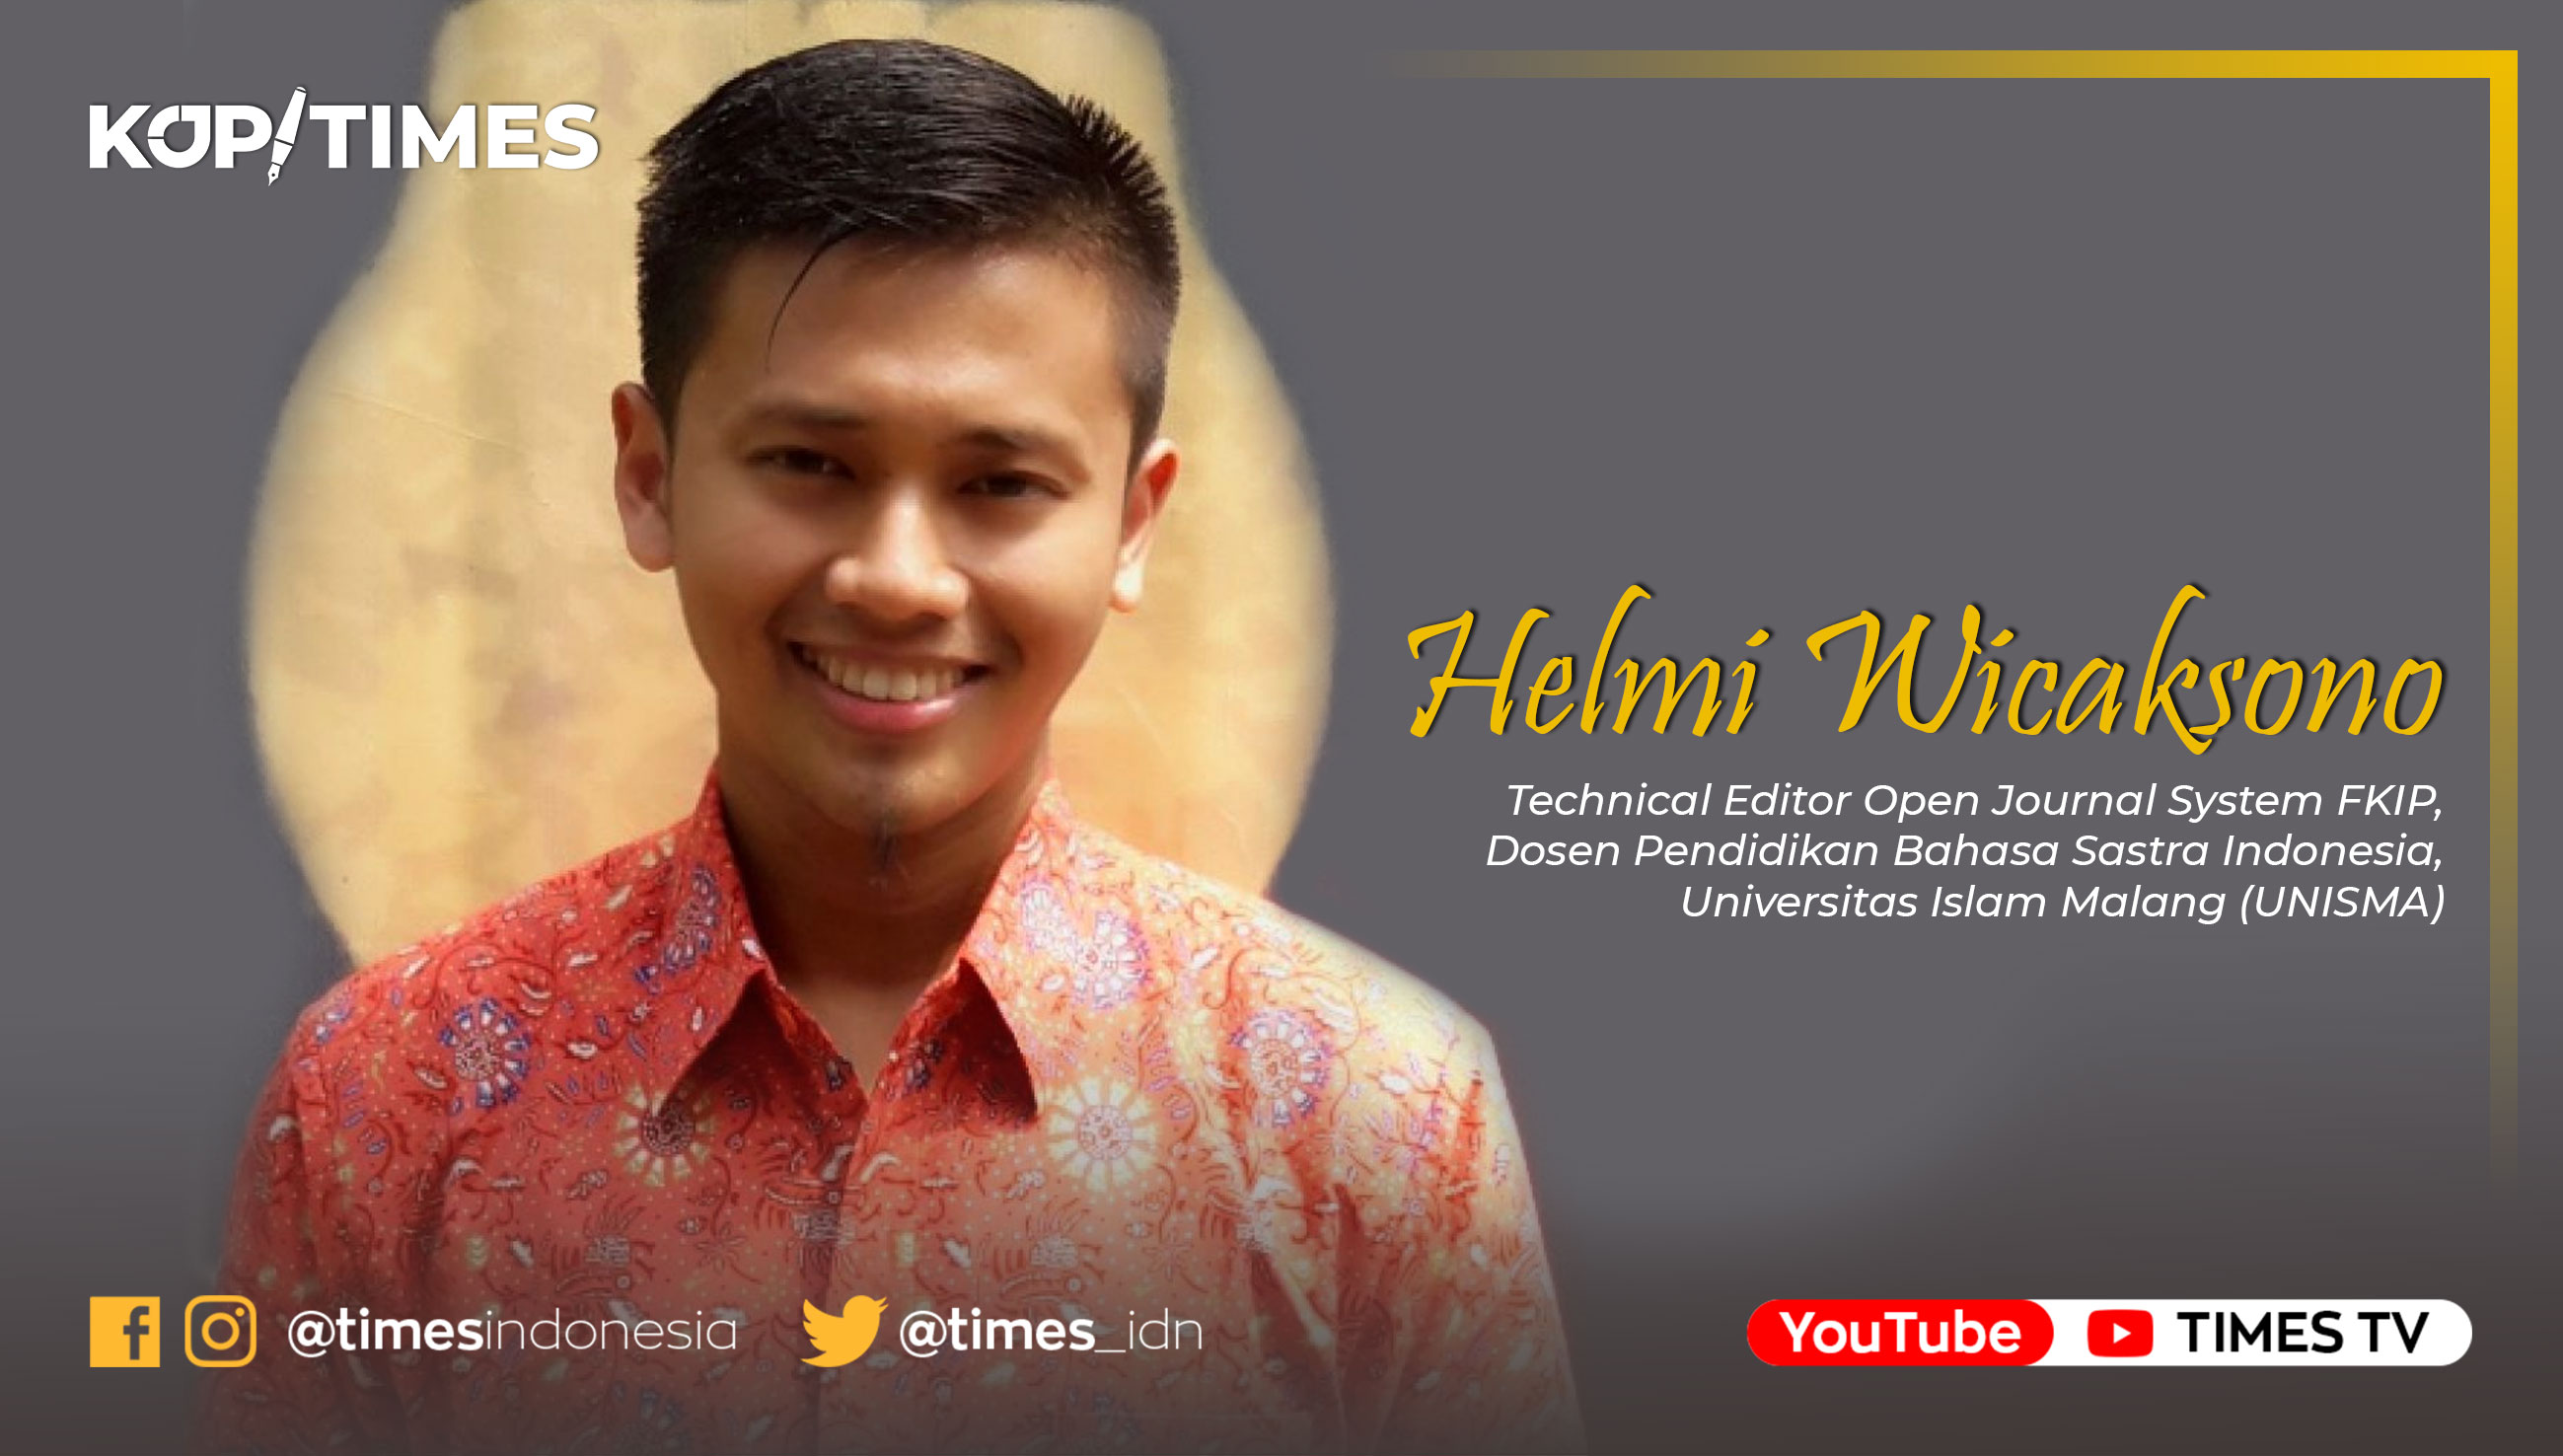 Helmi Wicaksono, Technical Editor Open Journal System FKIP, Dosen Pendidikan Bahasa Sastra Indonesia, Universitas Islam Malang (UNISMA).